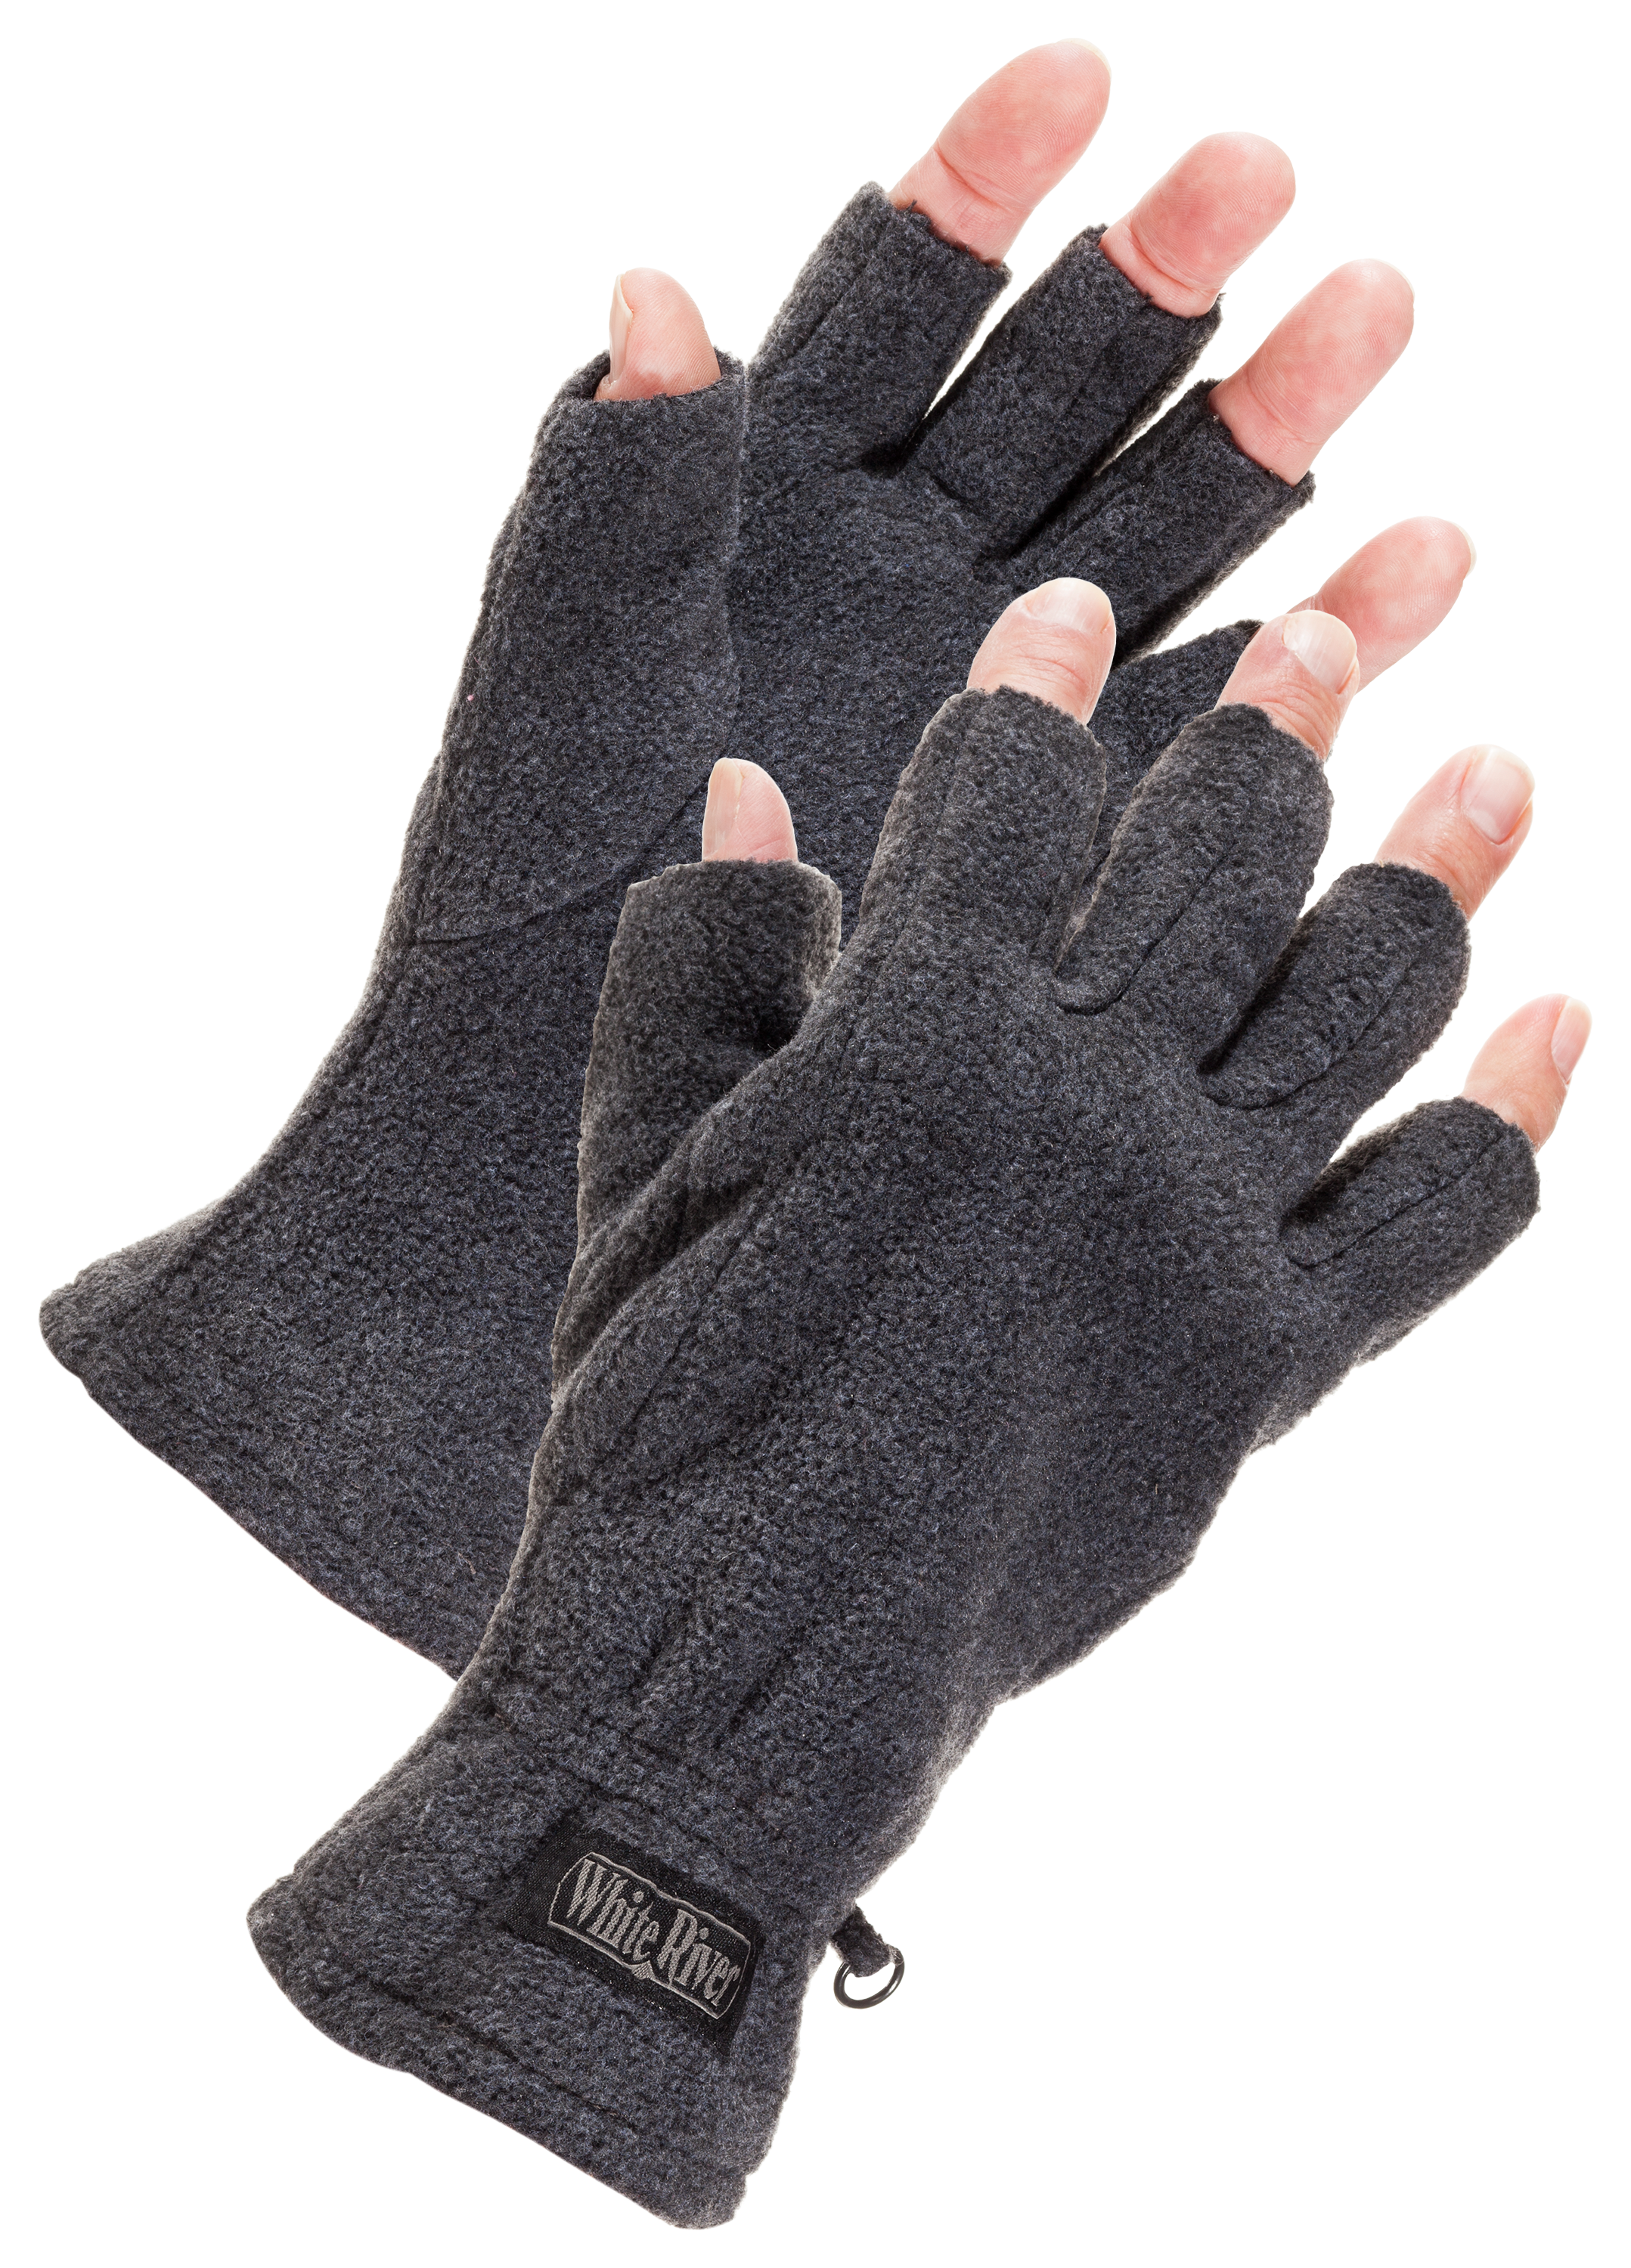 Fingerless Fishing Gloves with Cover Men Women Fleece Winter Warm